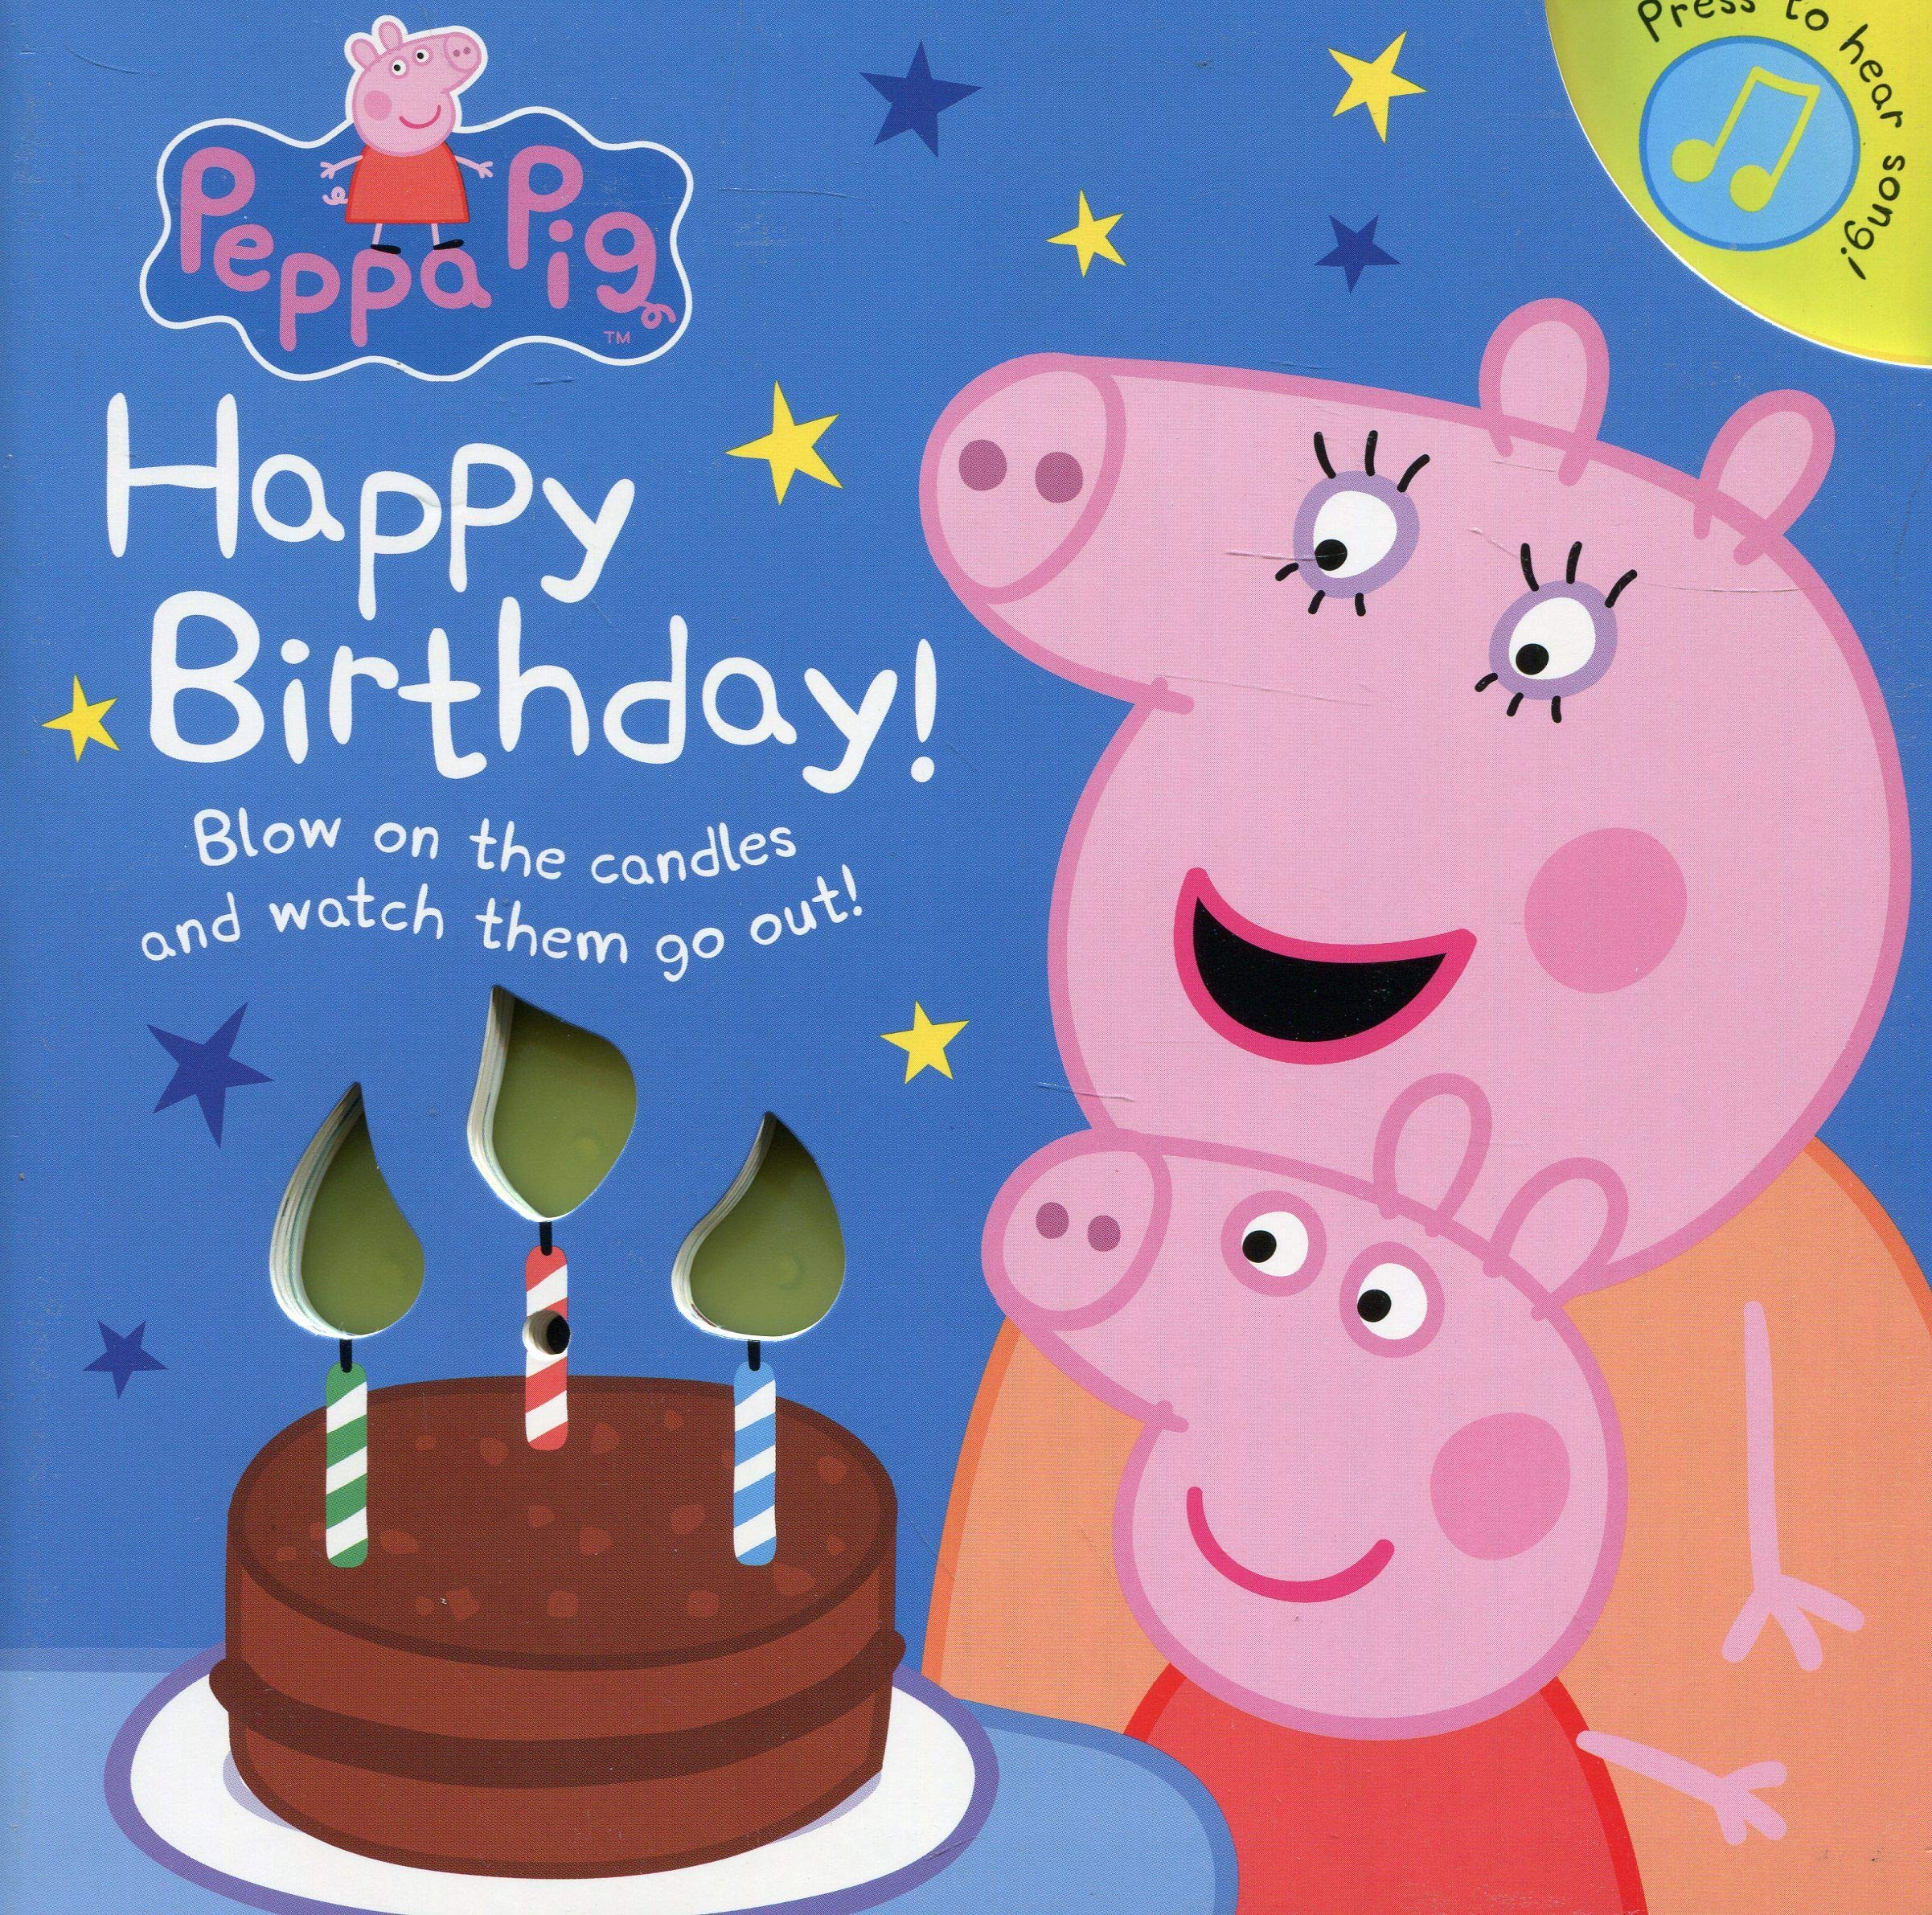 Peppa Pig Birthday Image